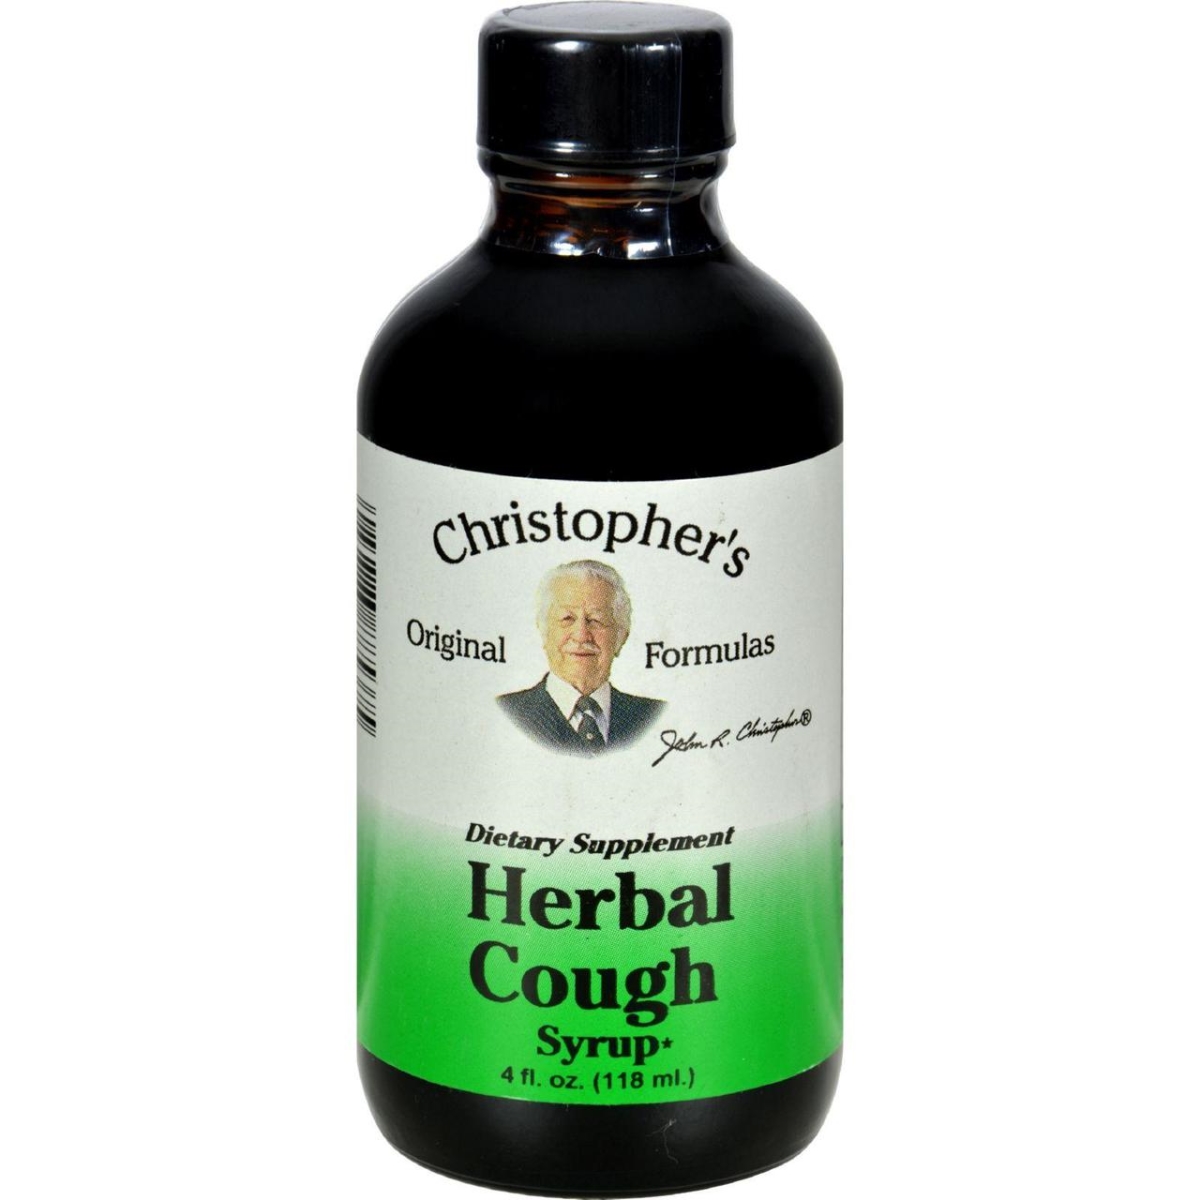 Hg0758235 4 Fl Oz Herbal Cough Syrup